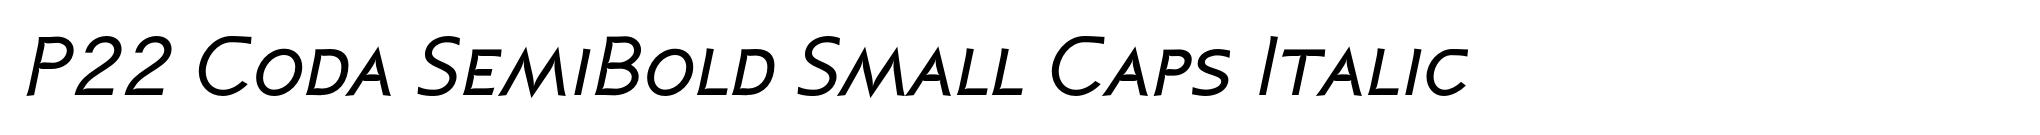 P22 Coda SemiBold Small Caps Italic image